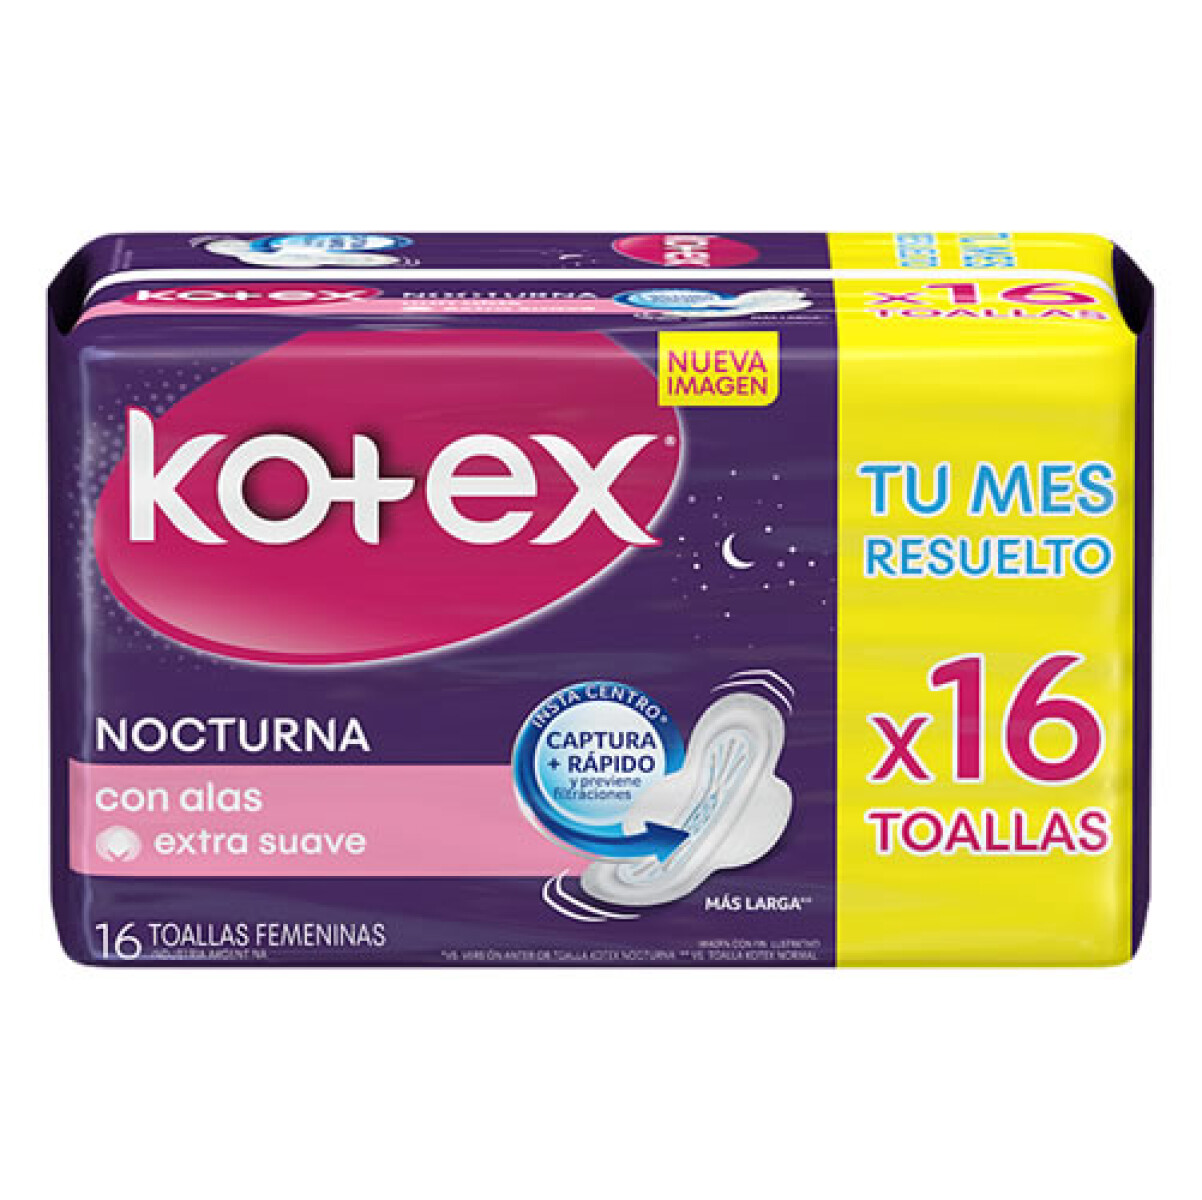 KOTEX NOCTURNA CON ALAS X16 